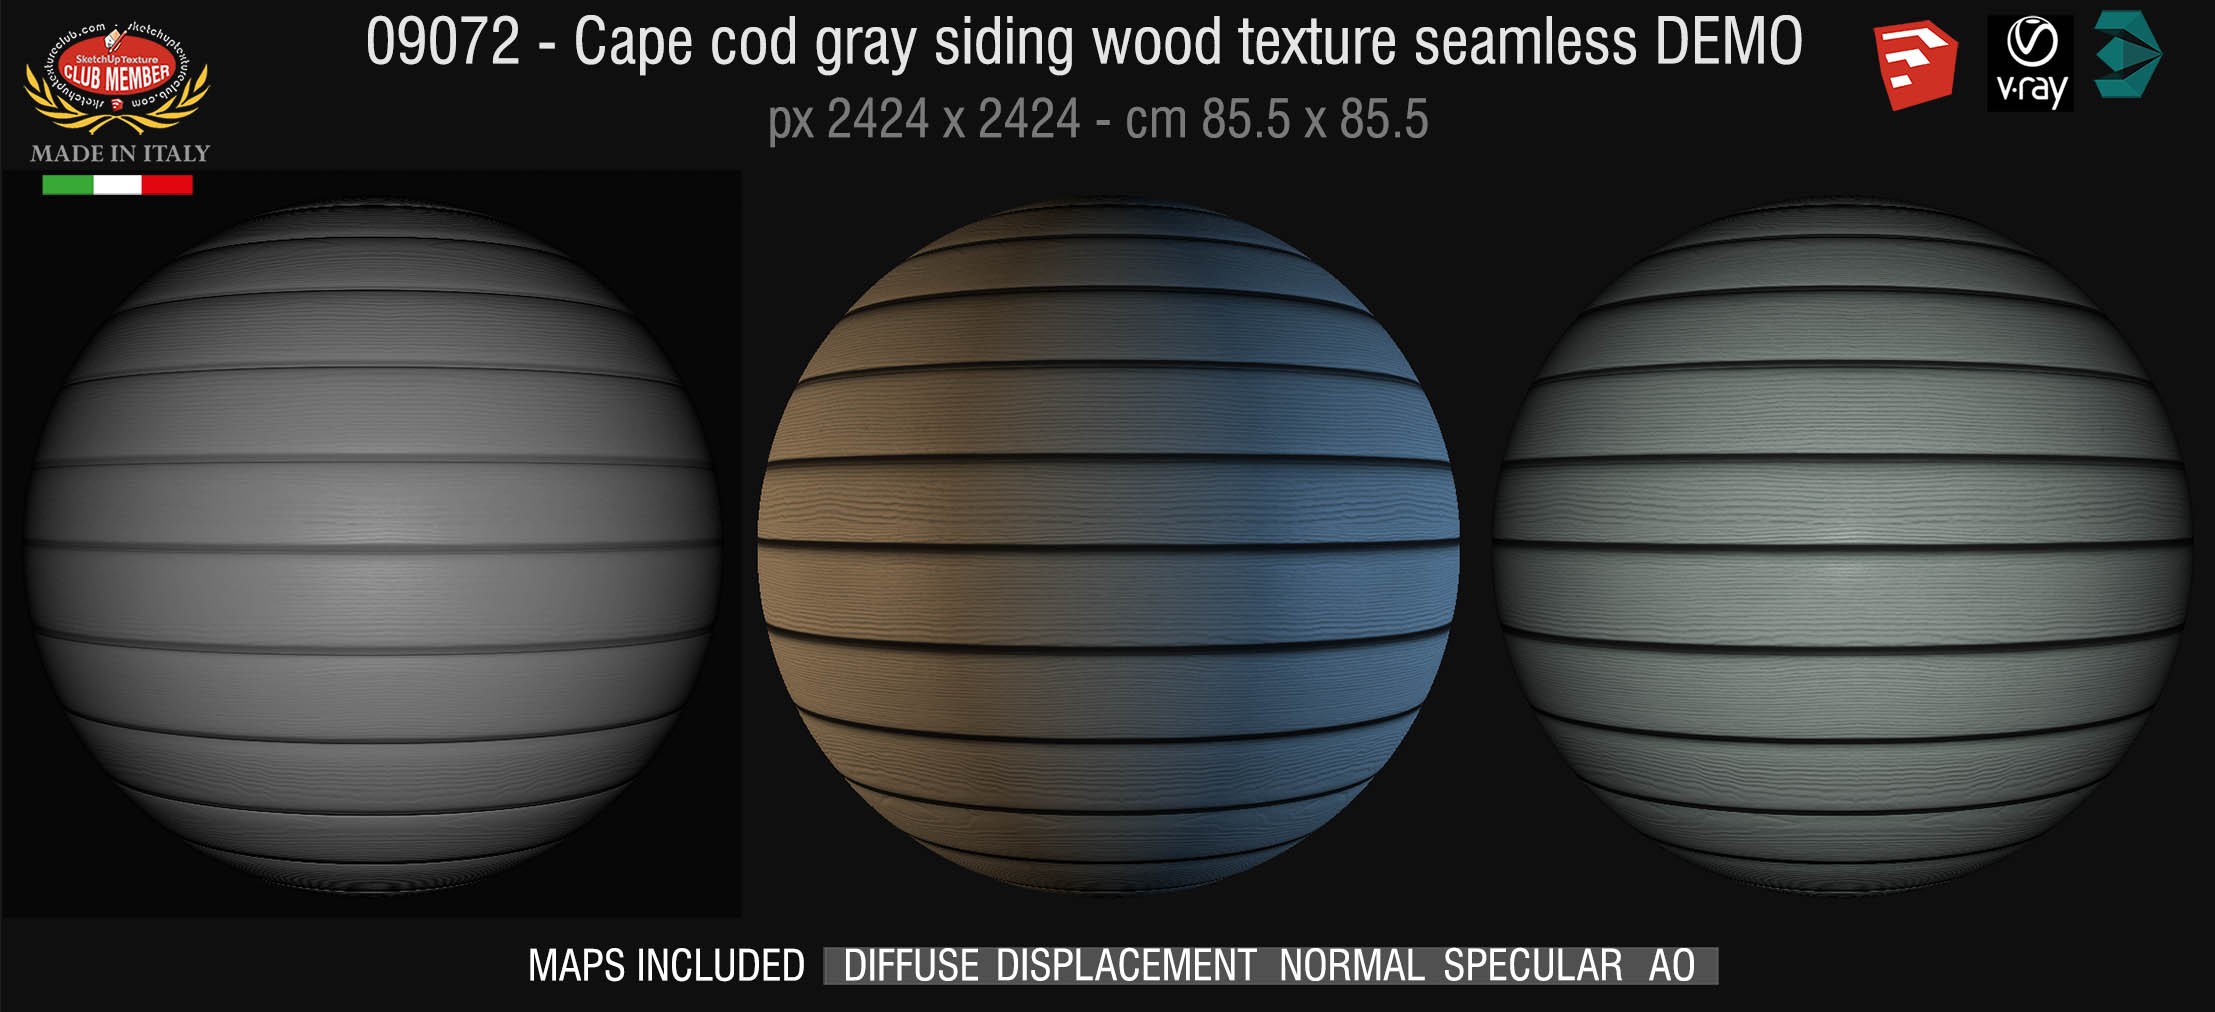 09072 HR Cape cod gray siding wood texture + maps DEMO